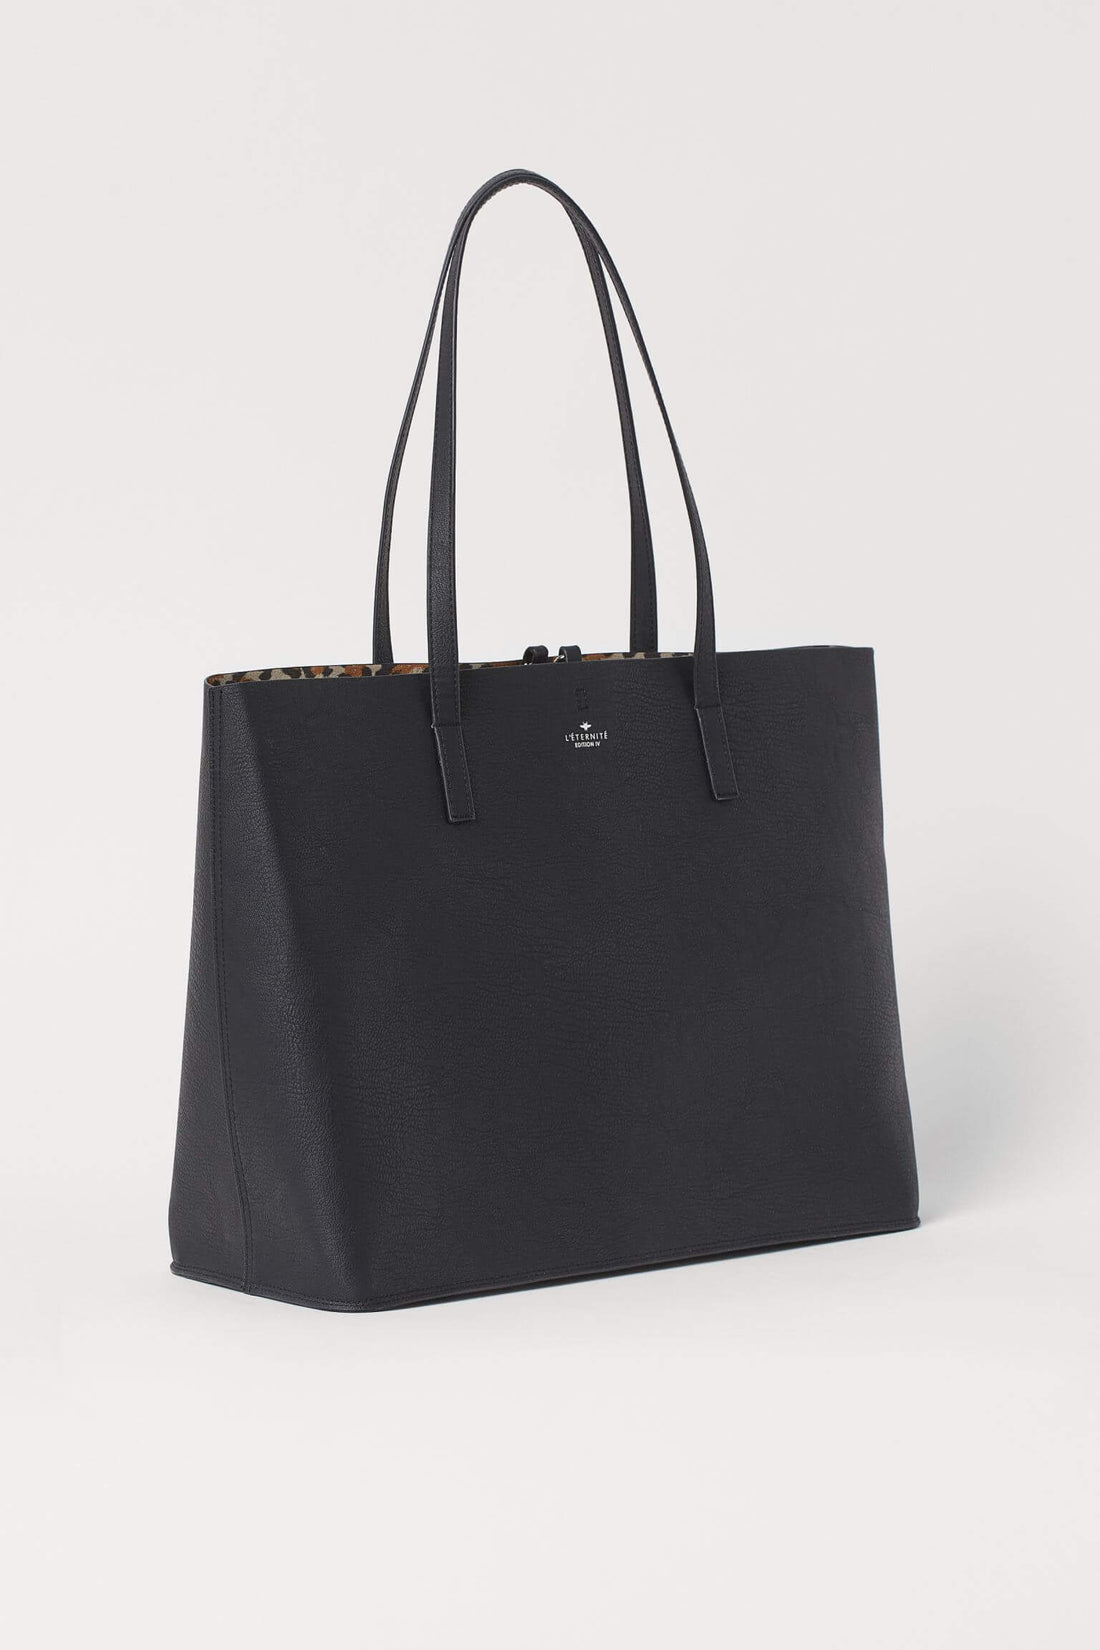 H&M Shopper Bag